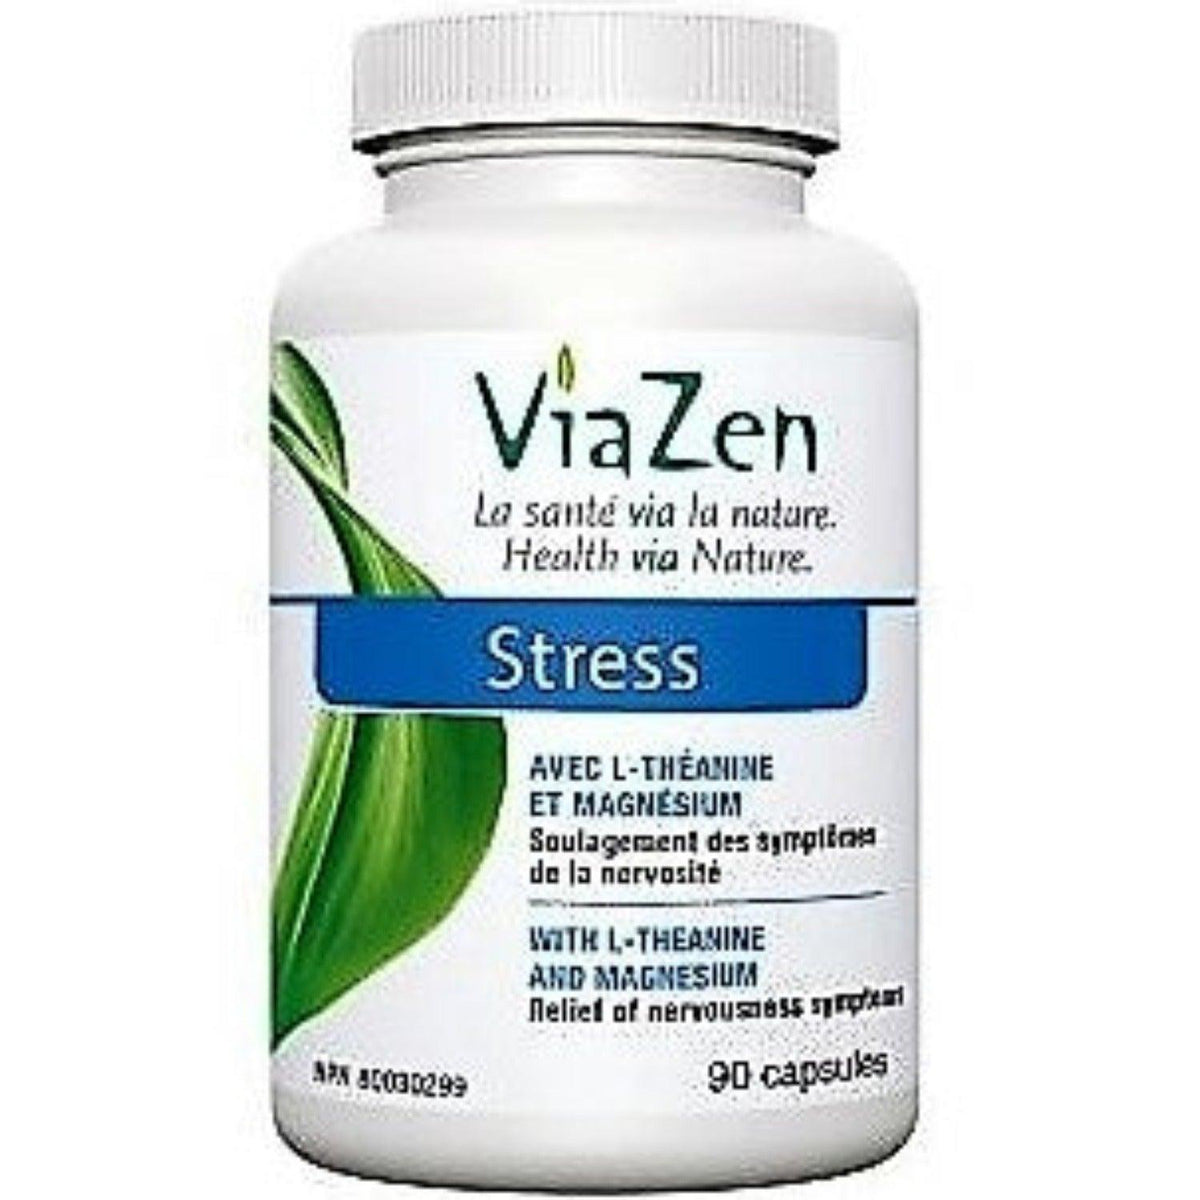 ViaZen Stress 90 capsules Supplements - Stress at Village Vitamin Store